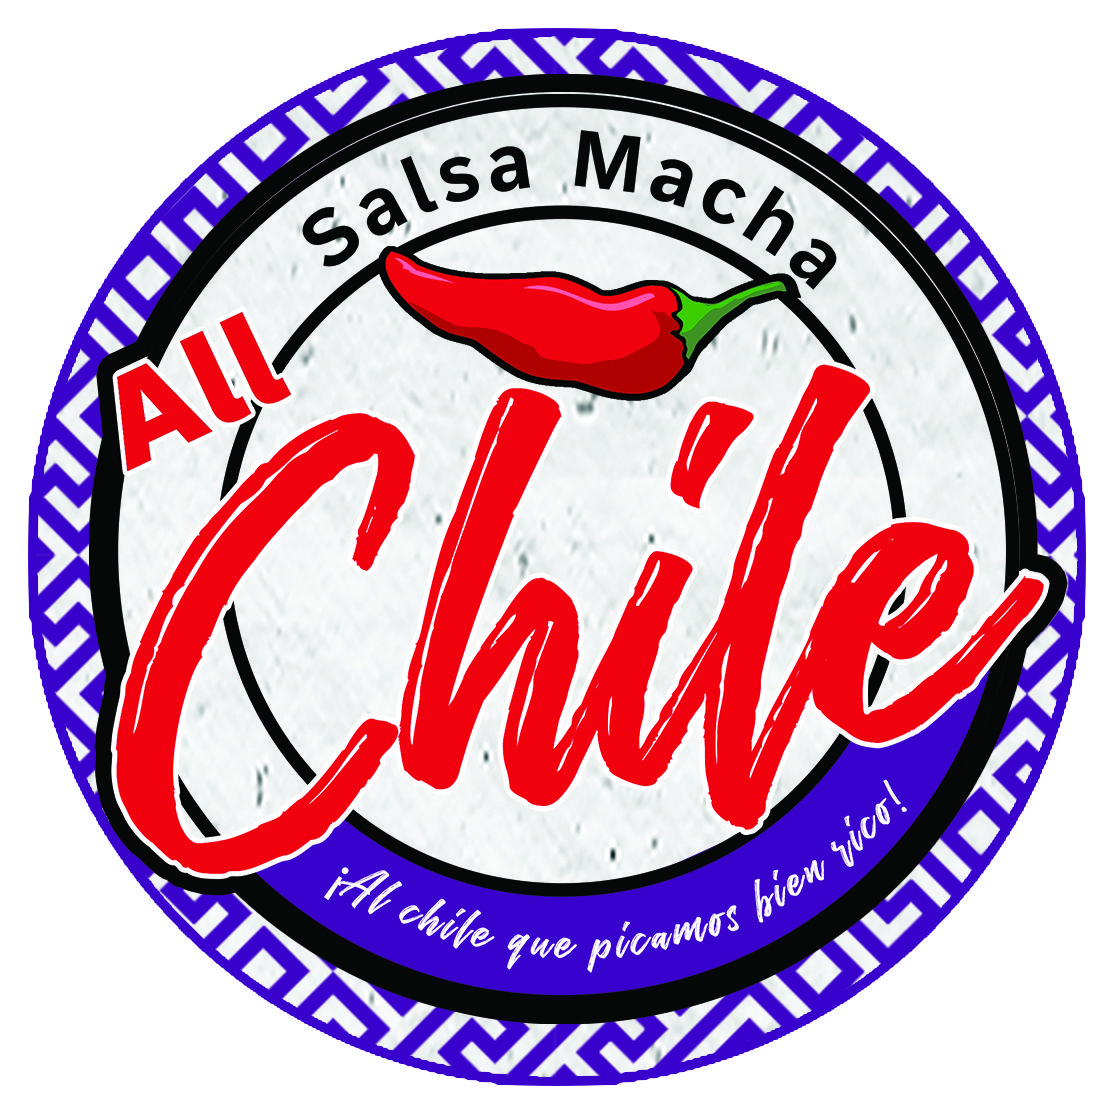 ALL CHILE SALSA MACHA